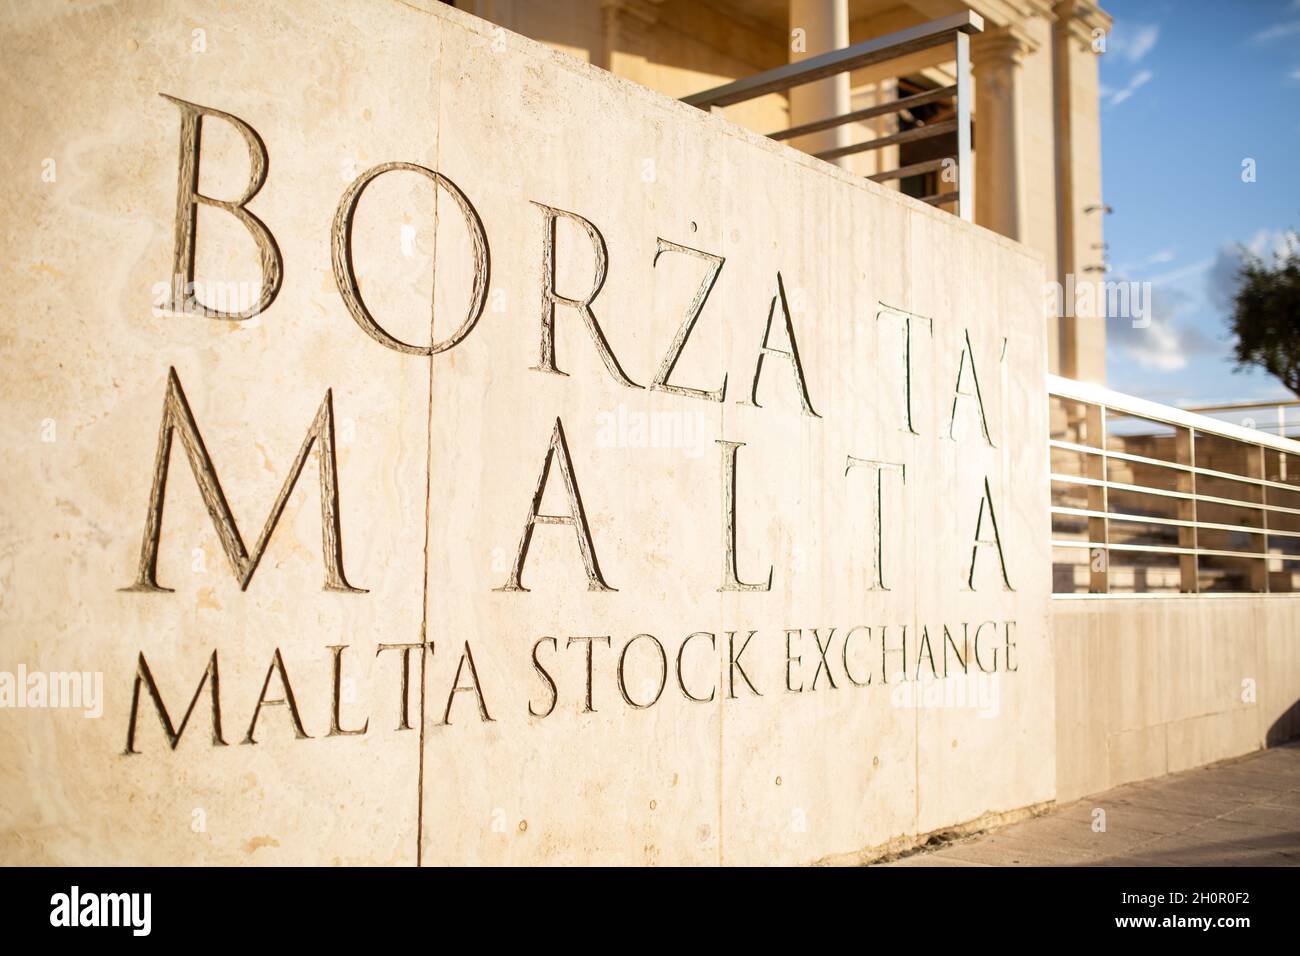 Valletta, Malta - October 9, 2021: Building of Malta Stock Exchange in Valletta, Malta. Stock Photo